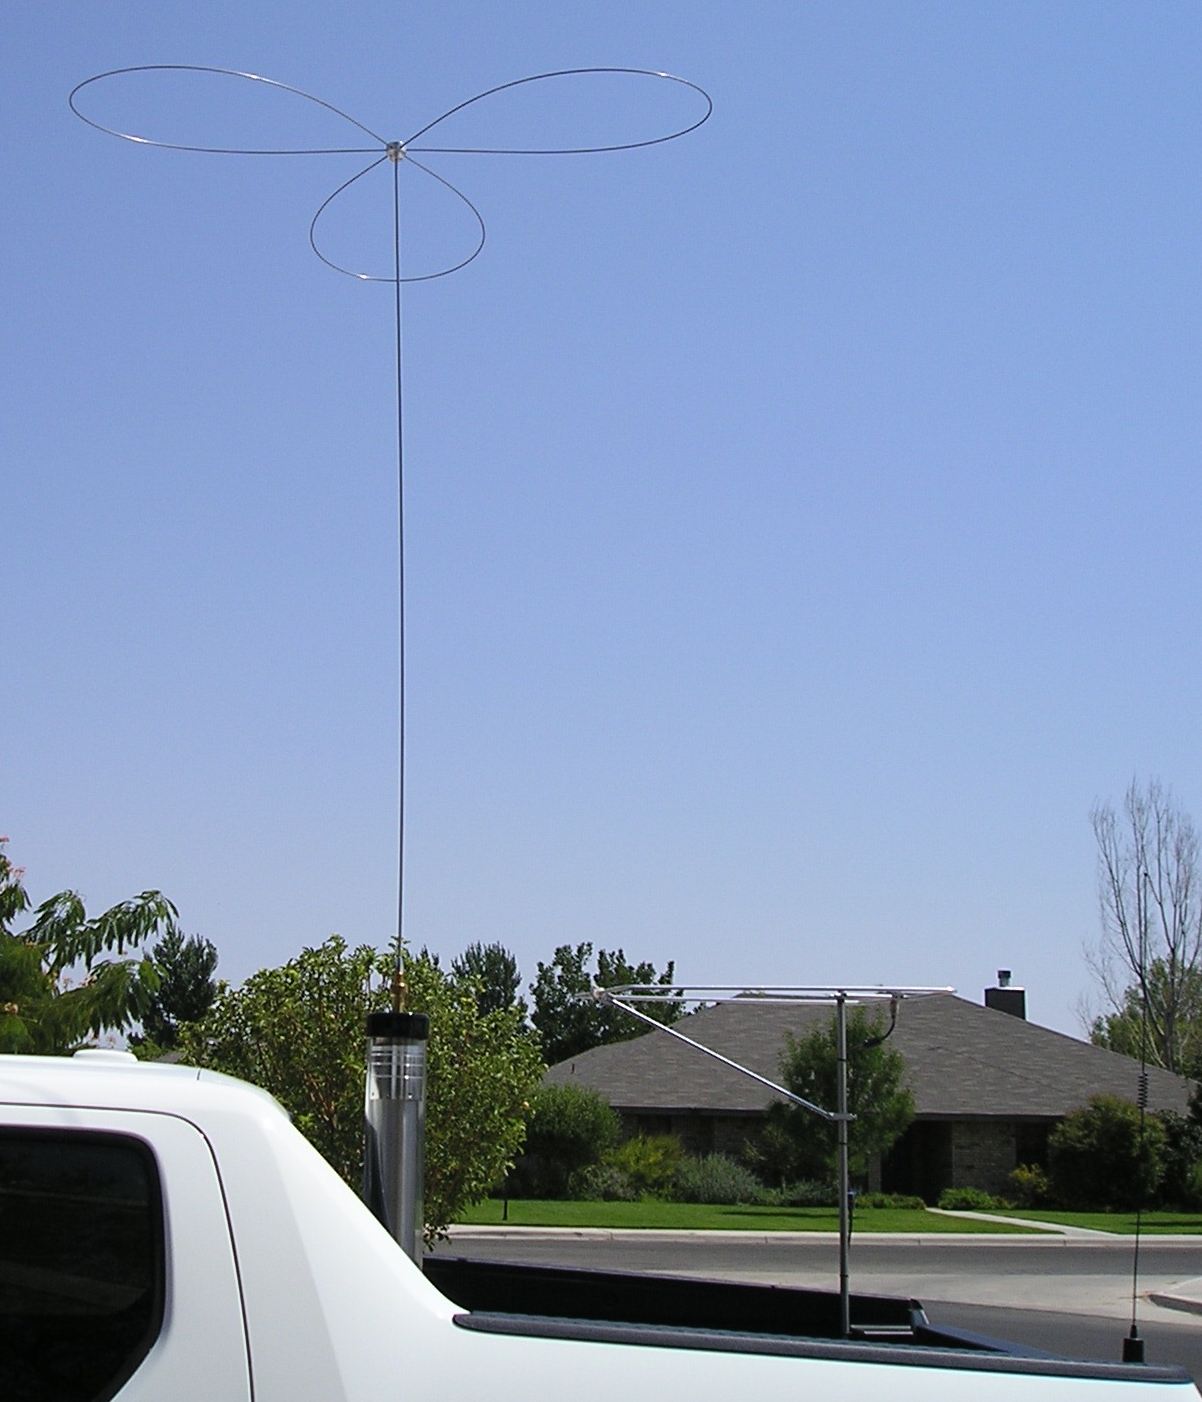 KØBG Antennas